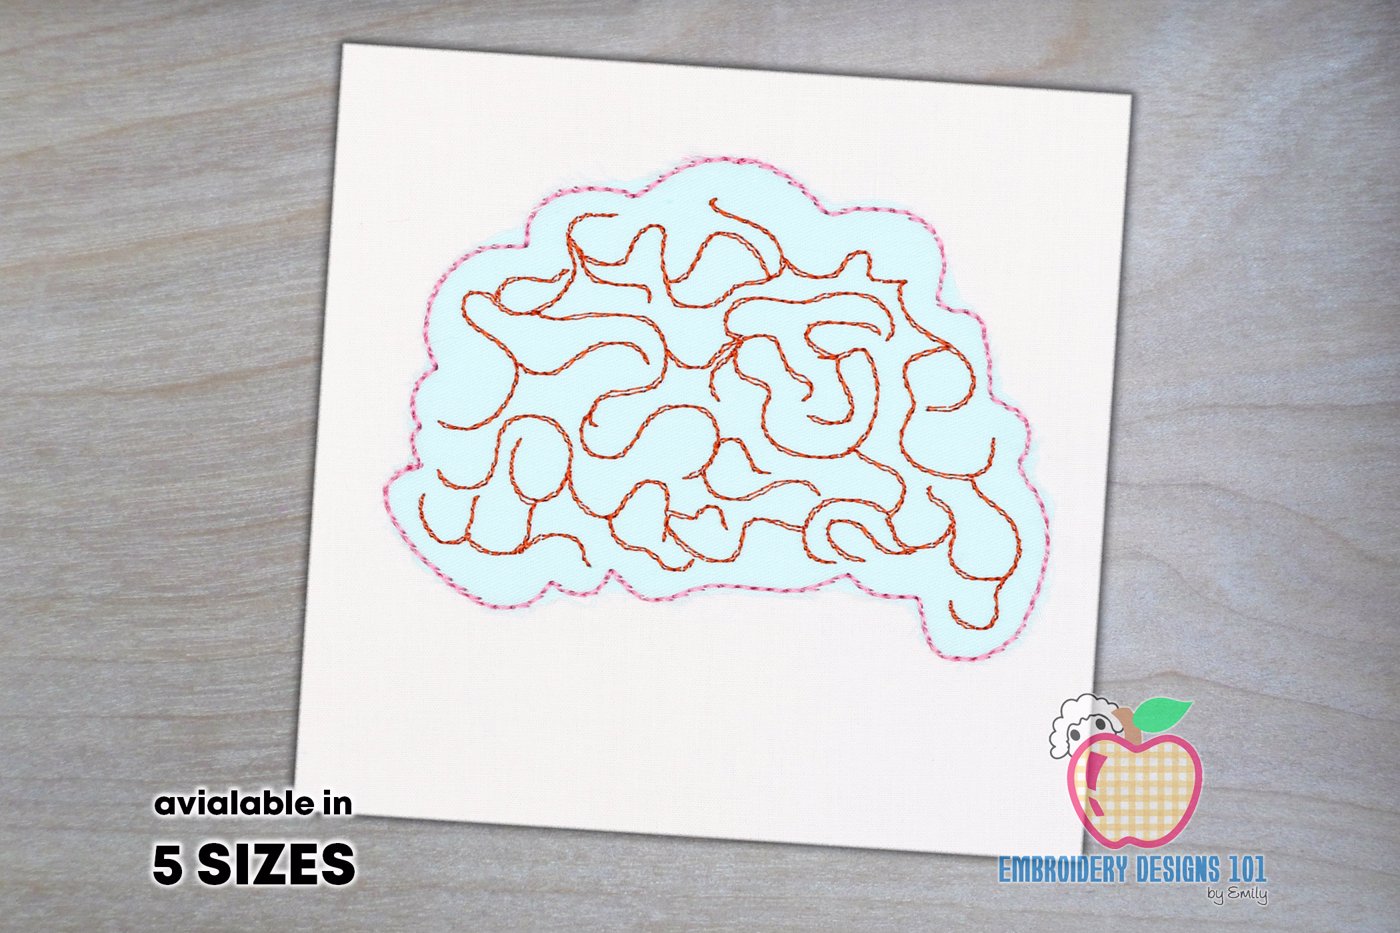 Crazy Brain Embroidery Design